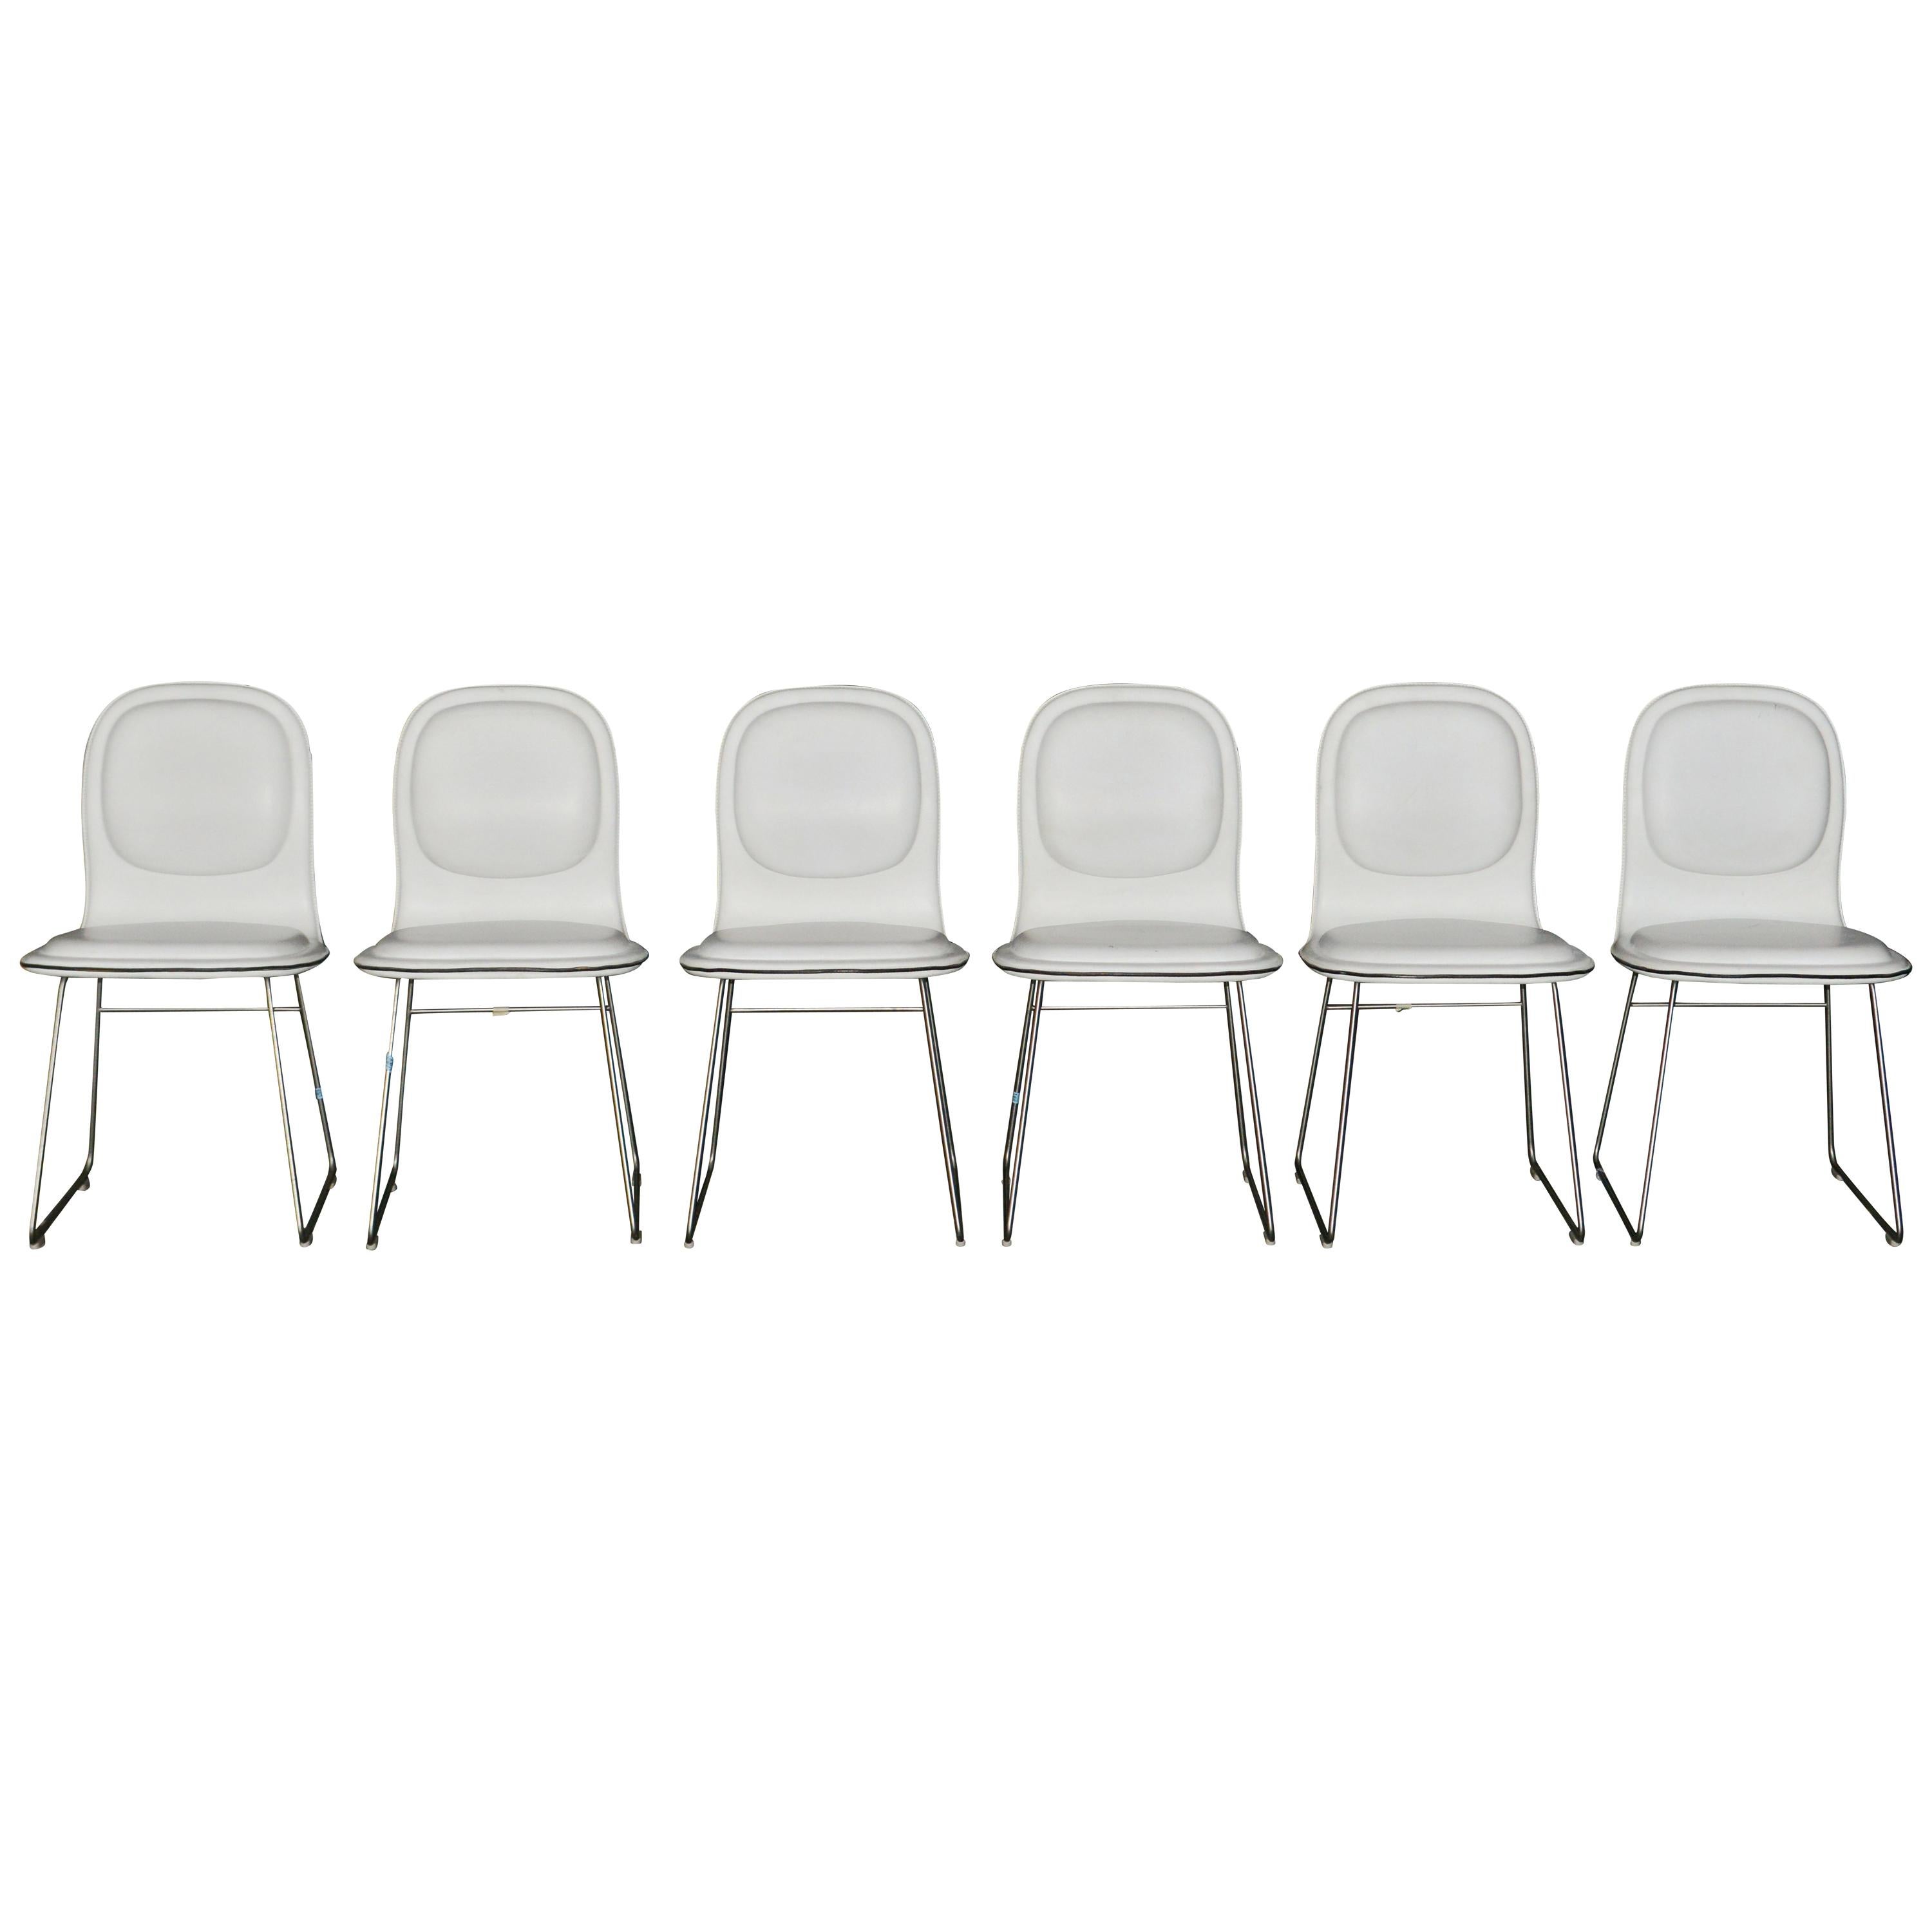 Jasper Morrison For Cappellini 'Hi Pad' White Leather Chairs